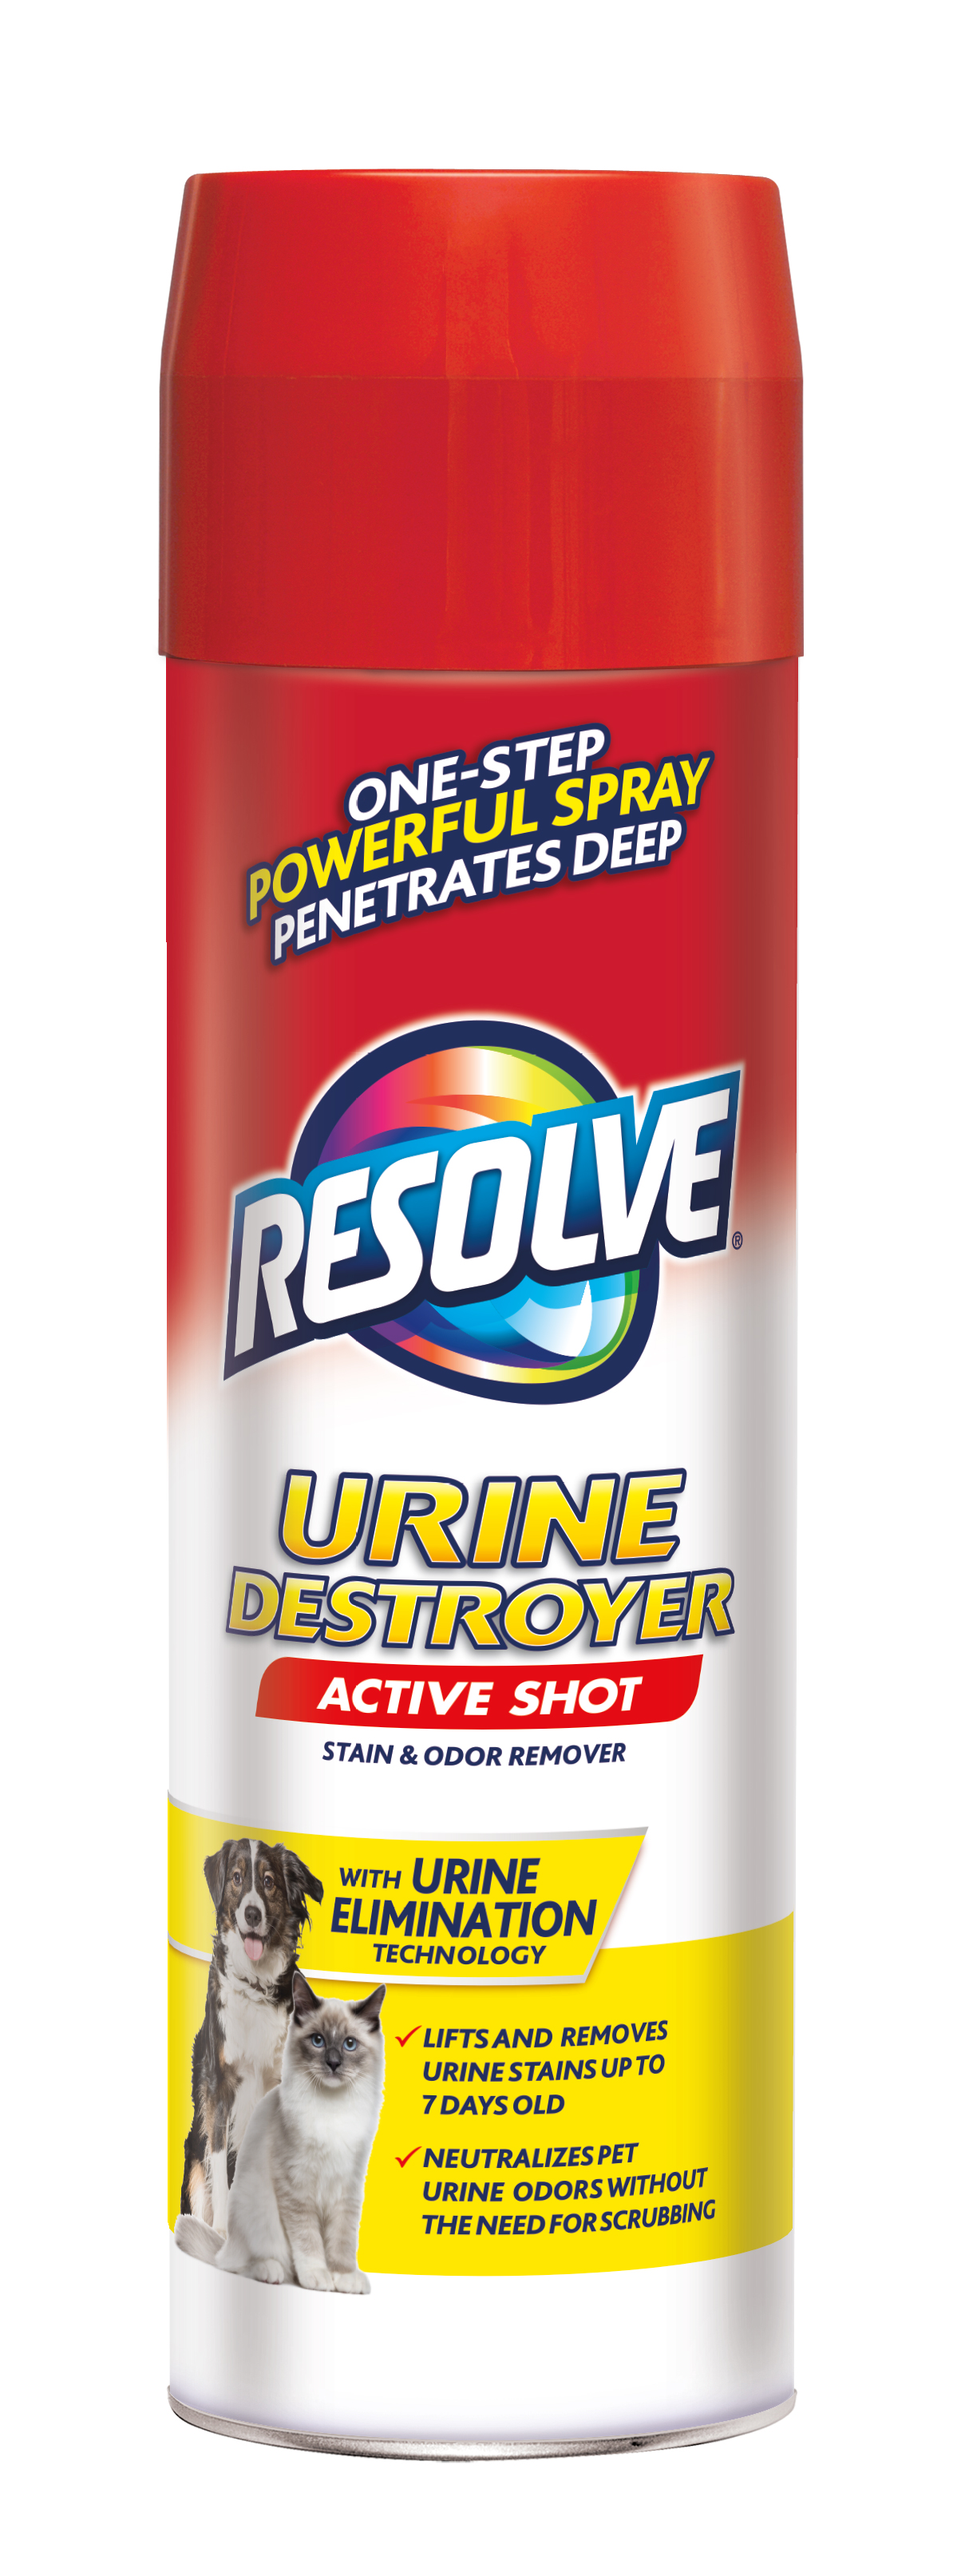 RESOLVE Urine Destroyer Active Shot